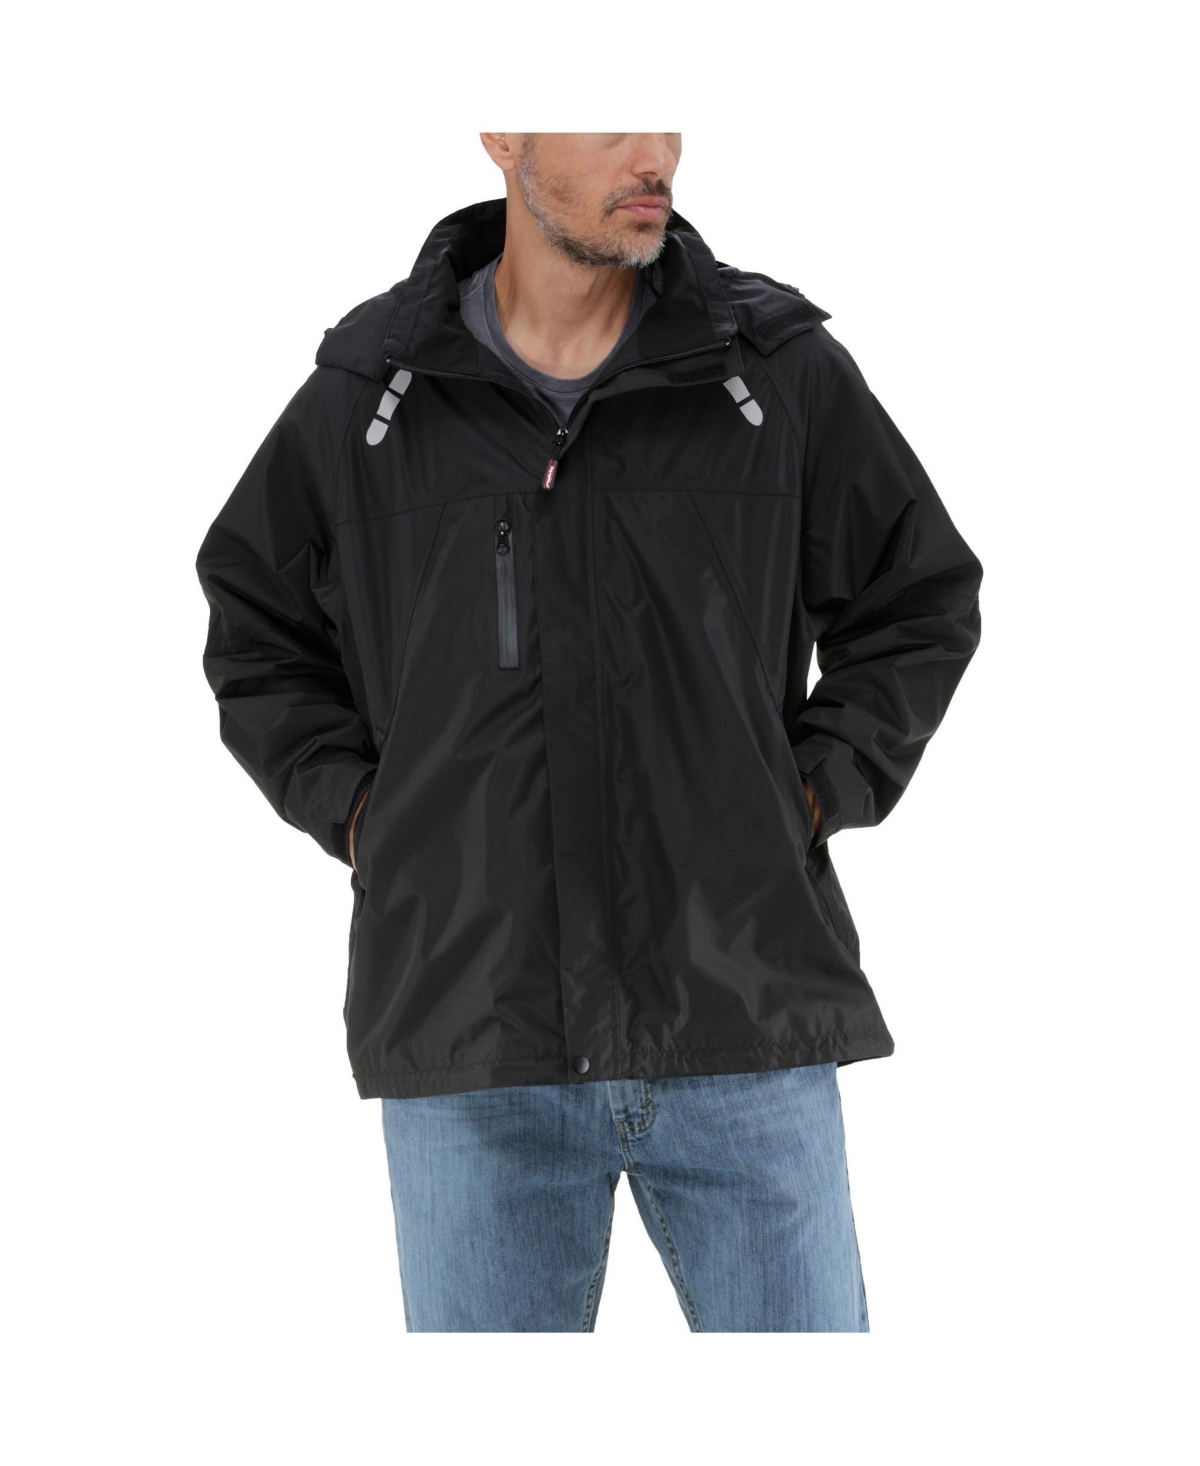 Big & Tall Lightweight Rain Jacket - Waterproof Raincoat with Detachable Hood - Black